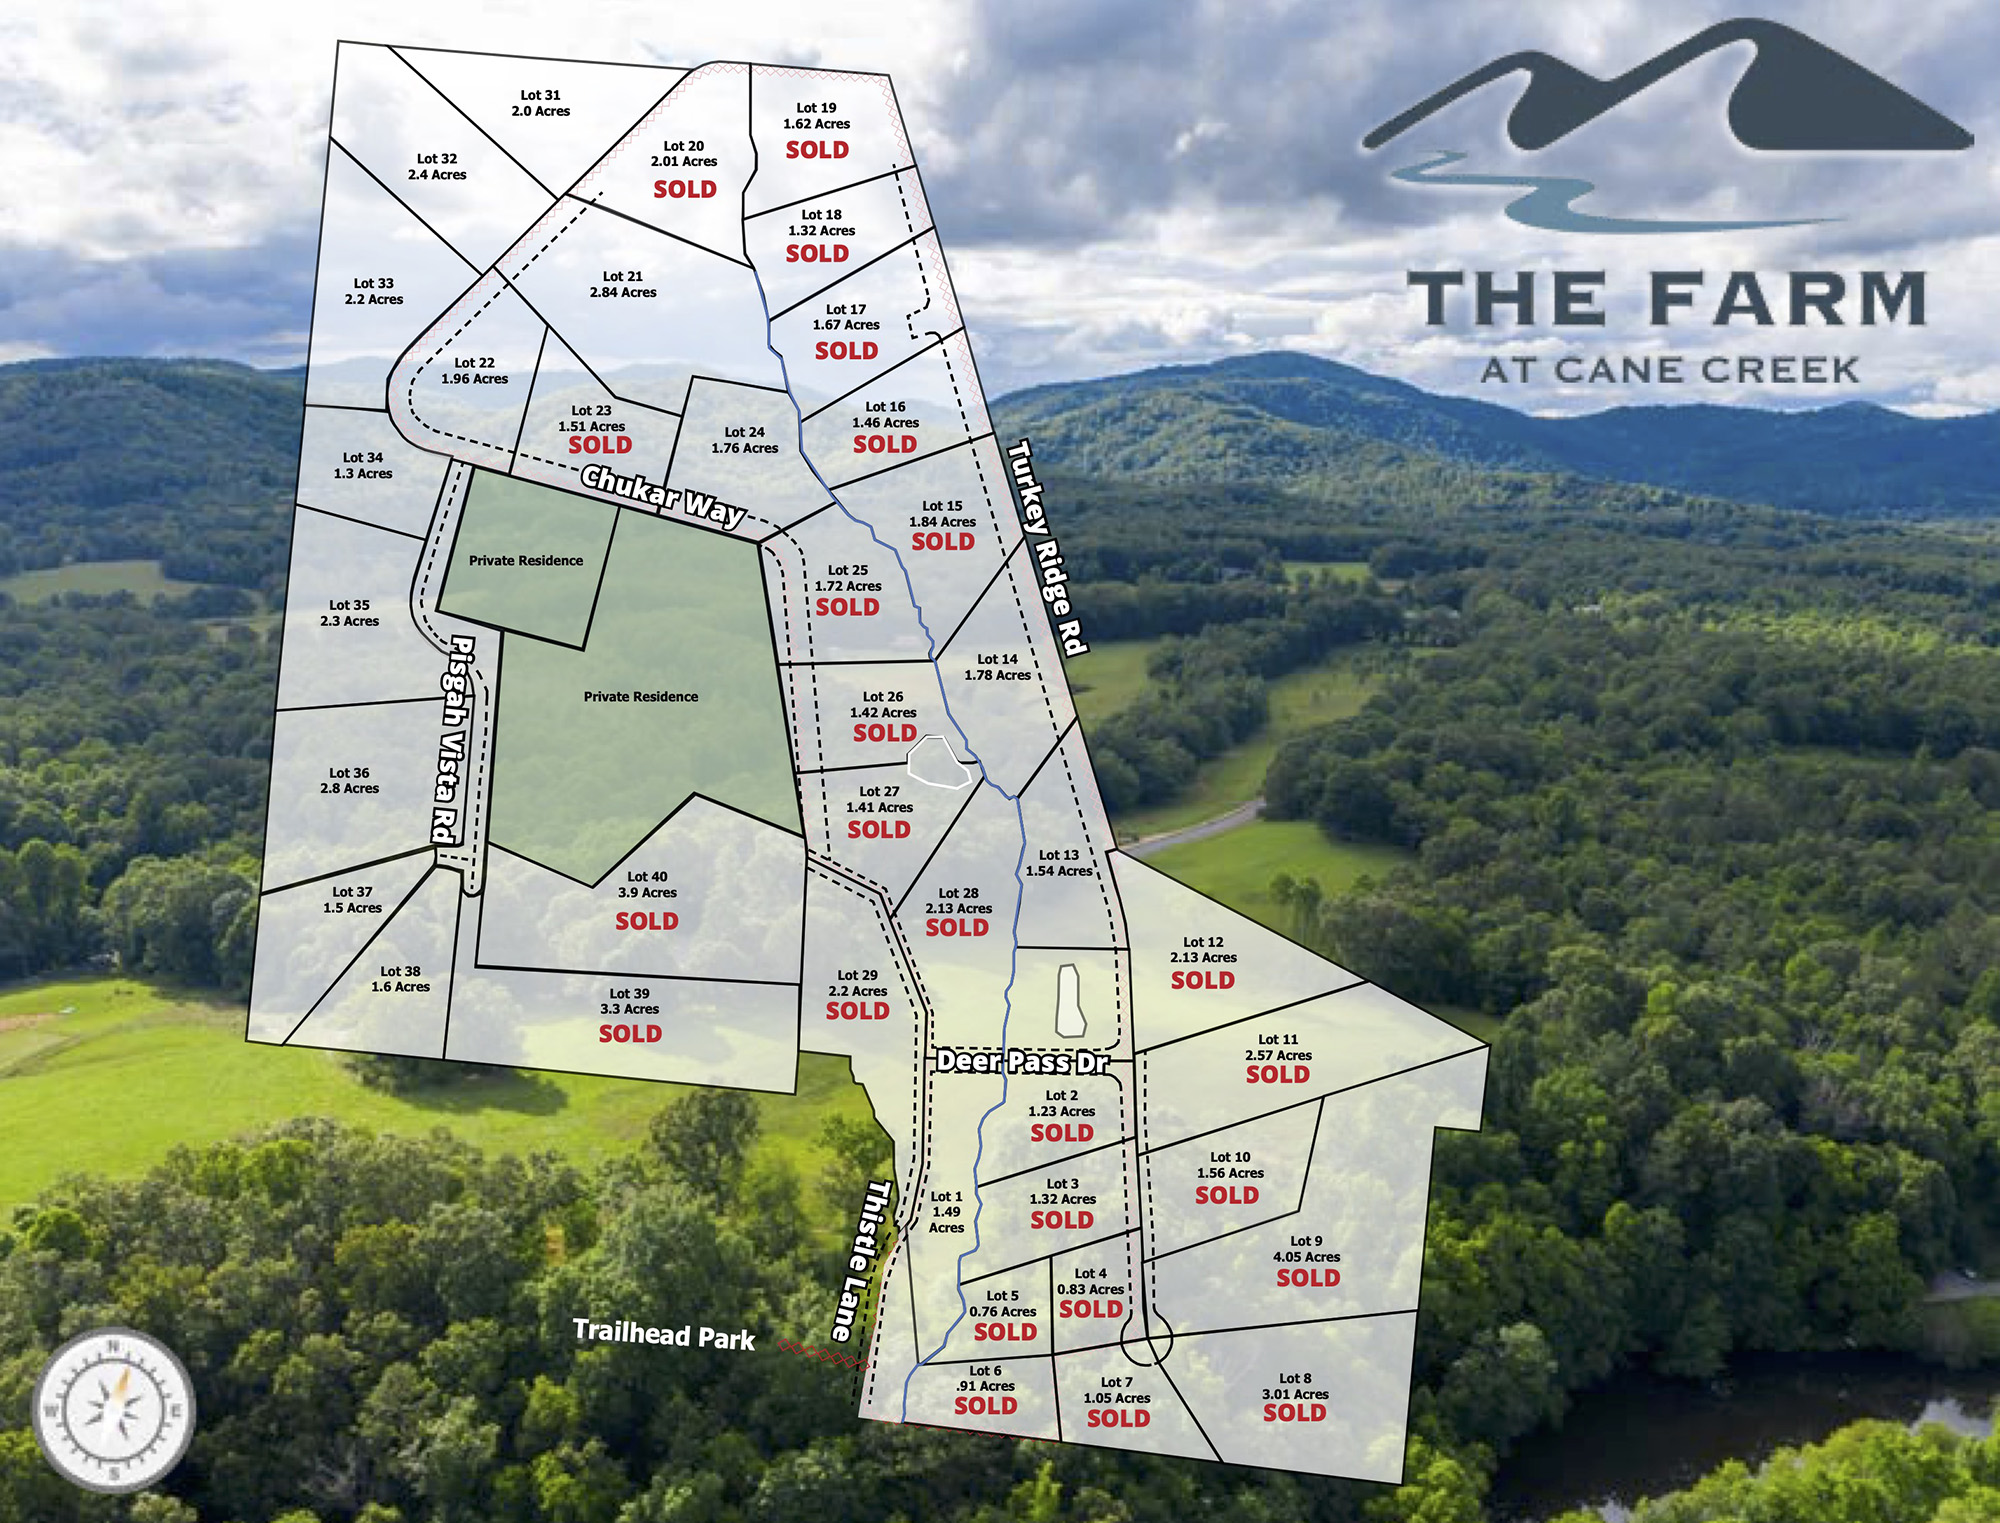 Site plan of Farm at Cane Creek